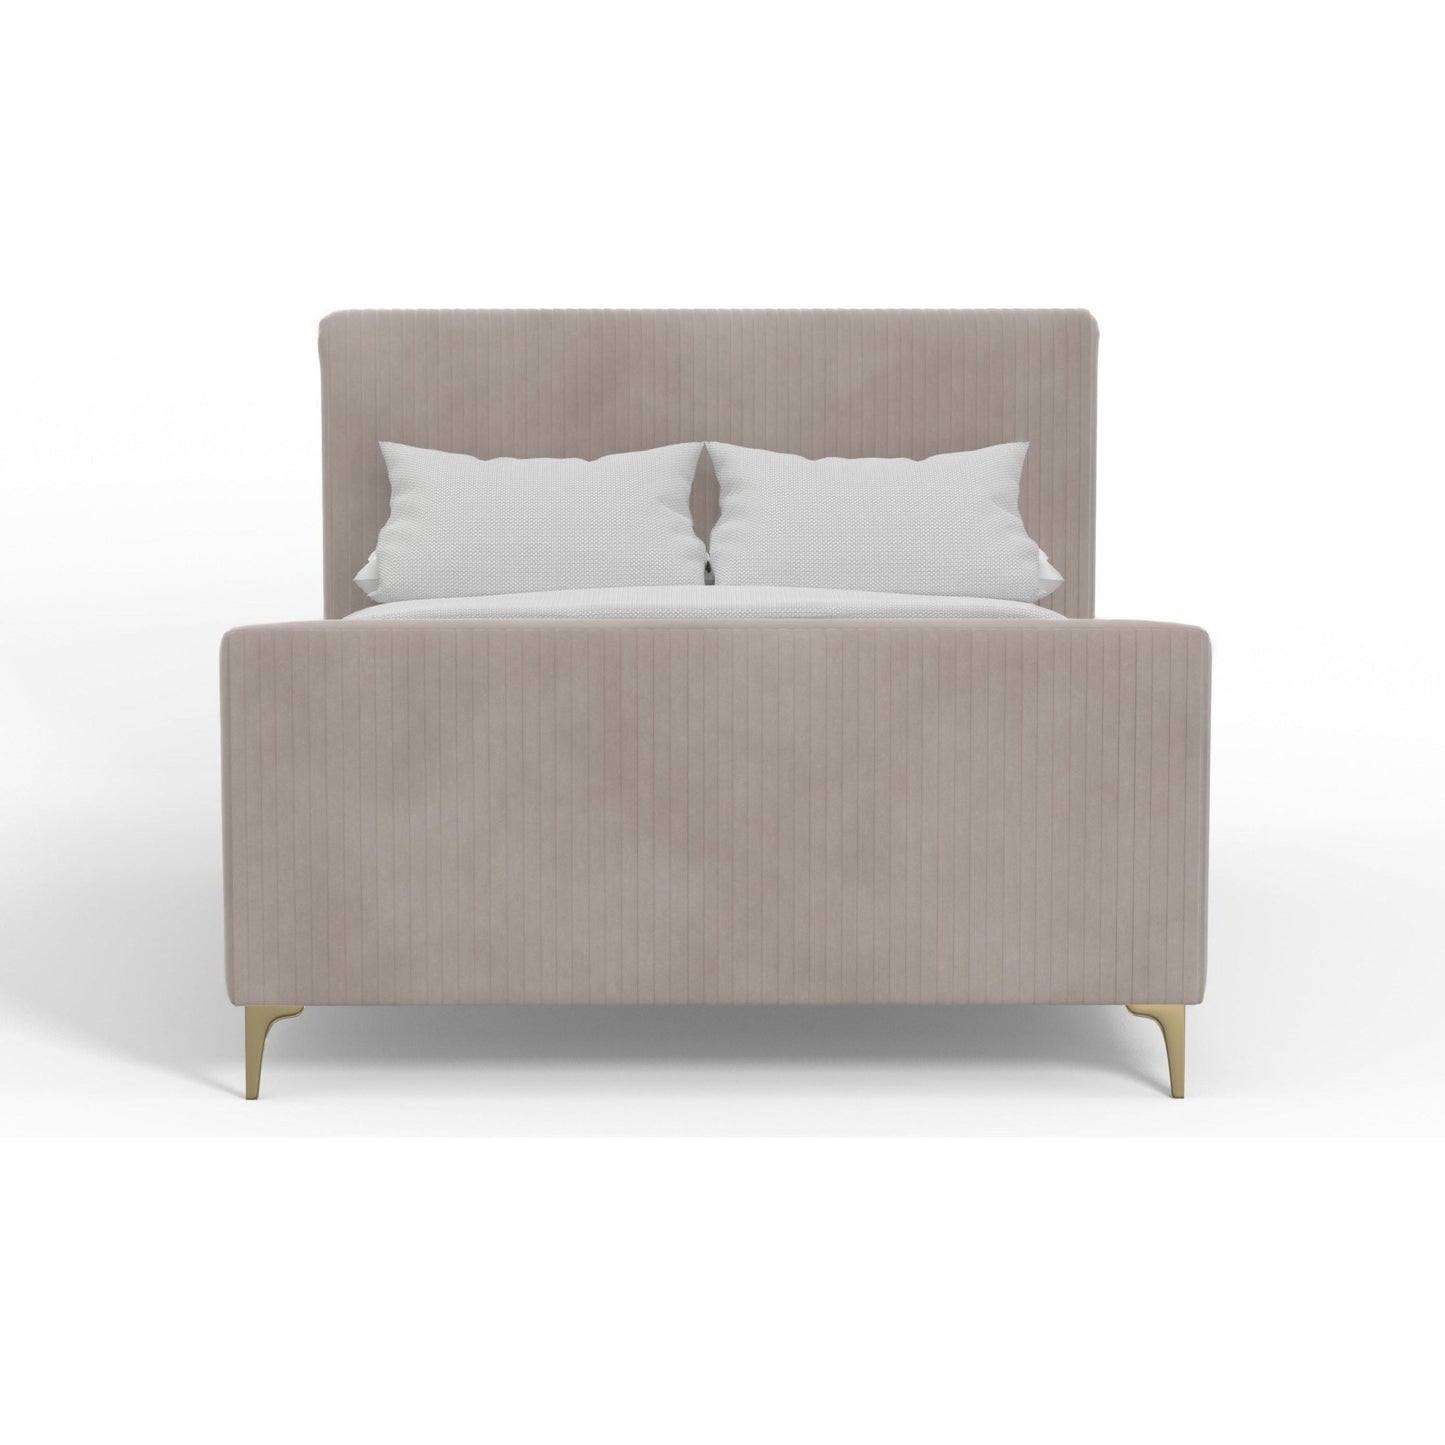 Zaldy Platform Bed, Light Grey - Alpine Furniture